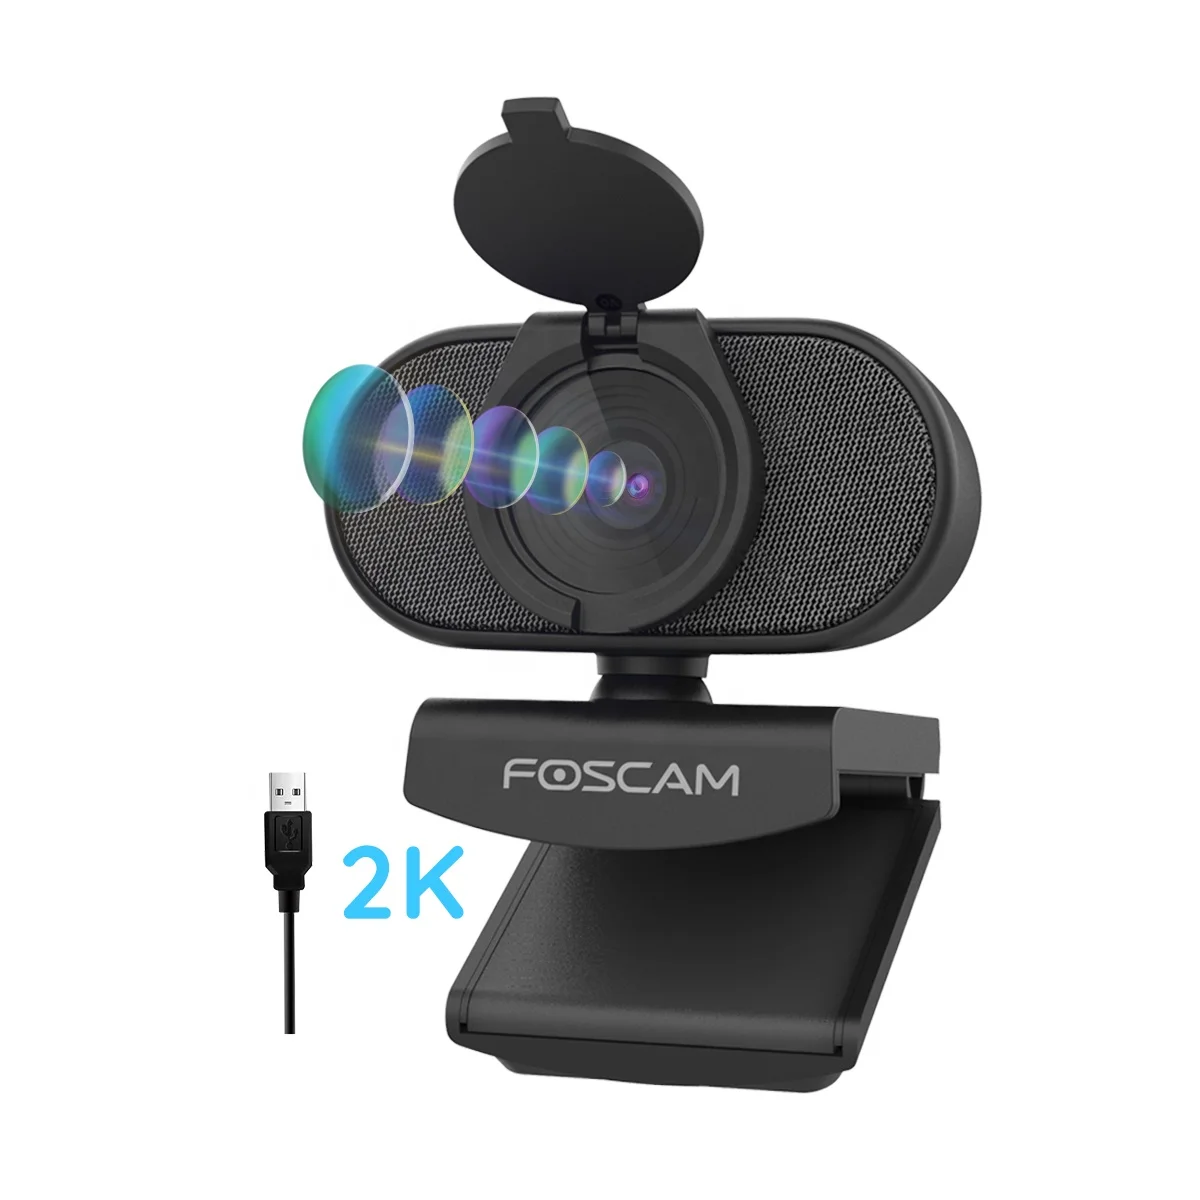 

Foscam OEM ODM webcam 4k 2k 1080p full hd usb web camera with microphone